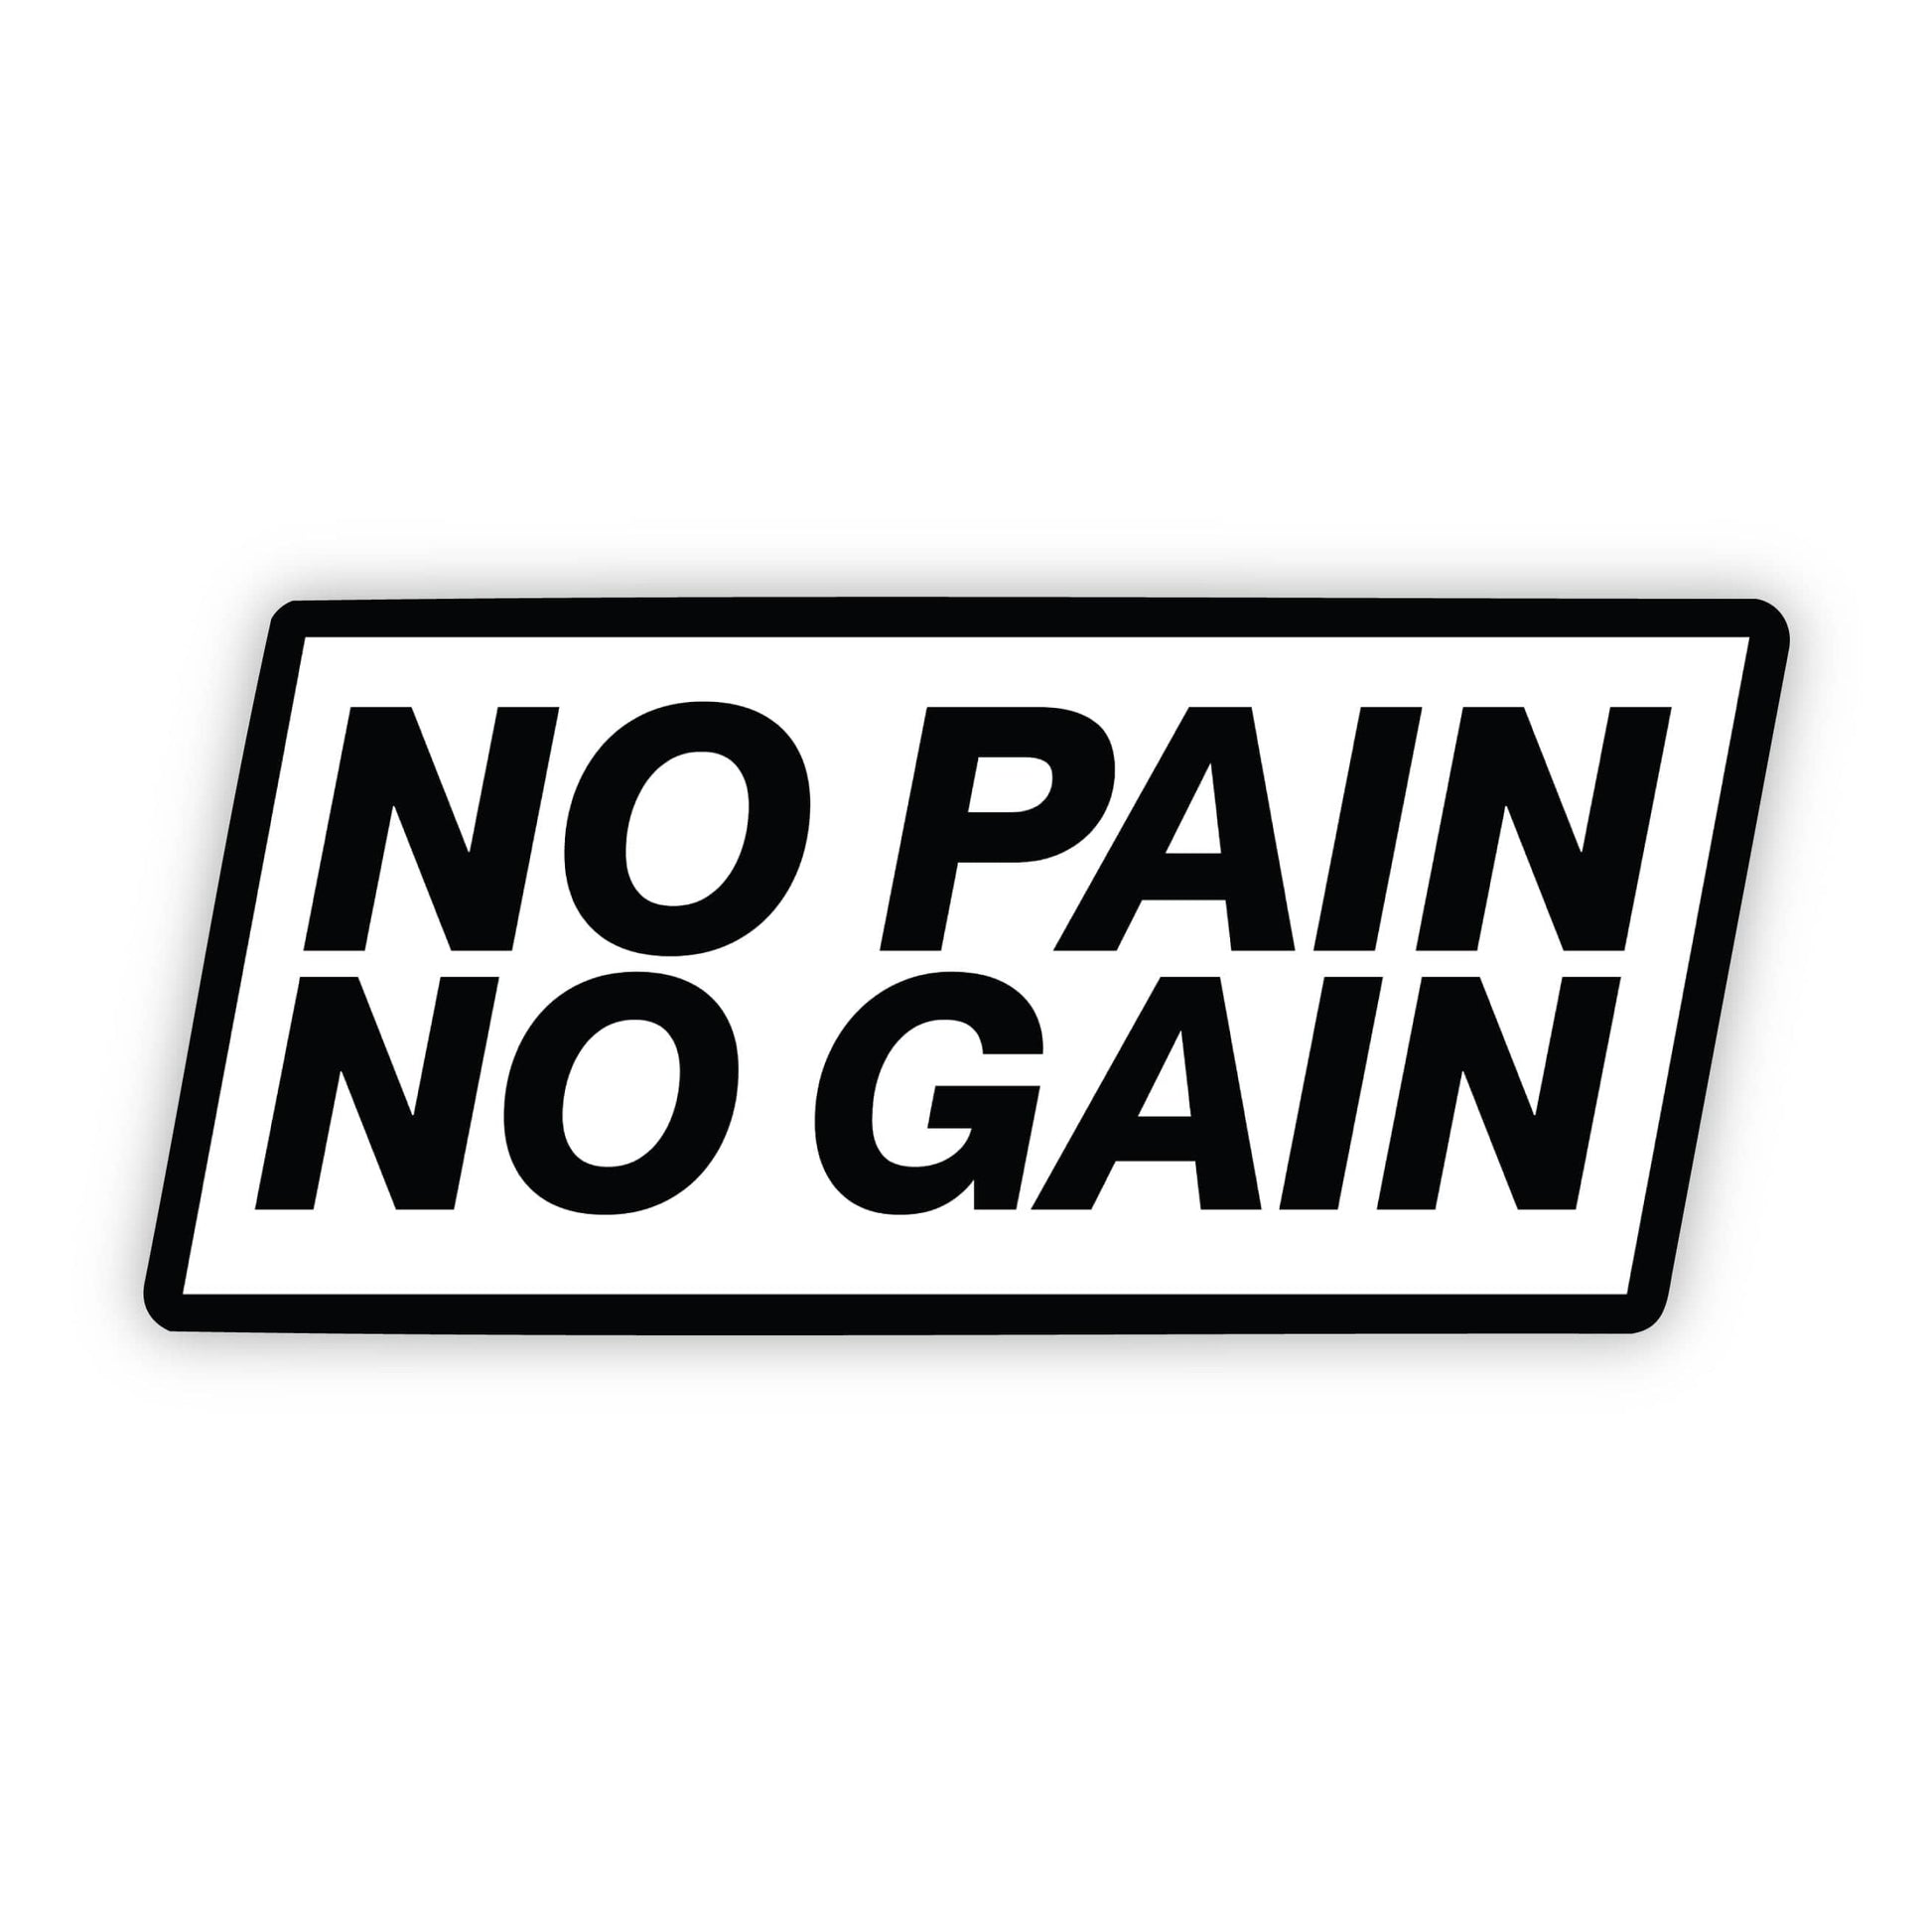 No Pain No Gain Motivational Sticker - Black and White